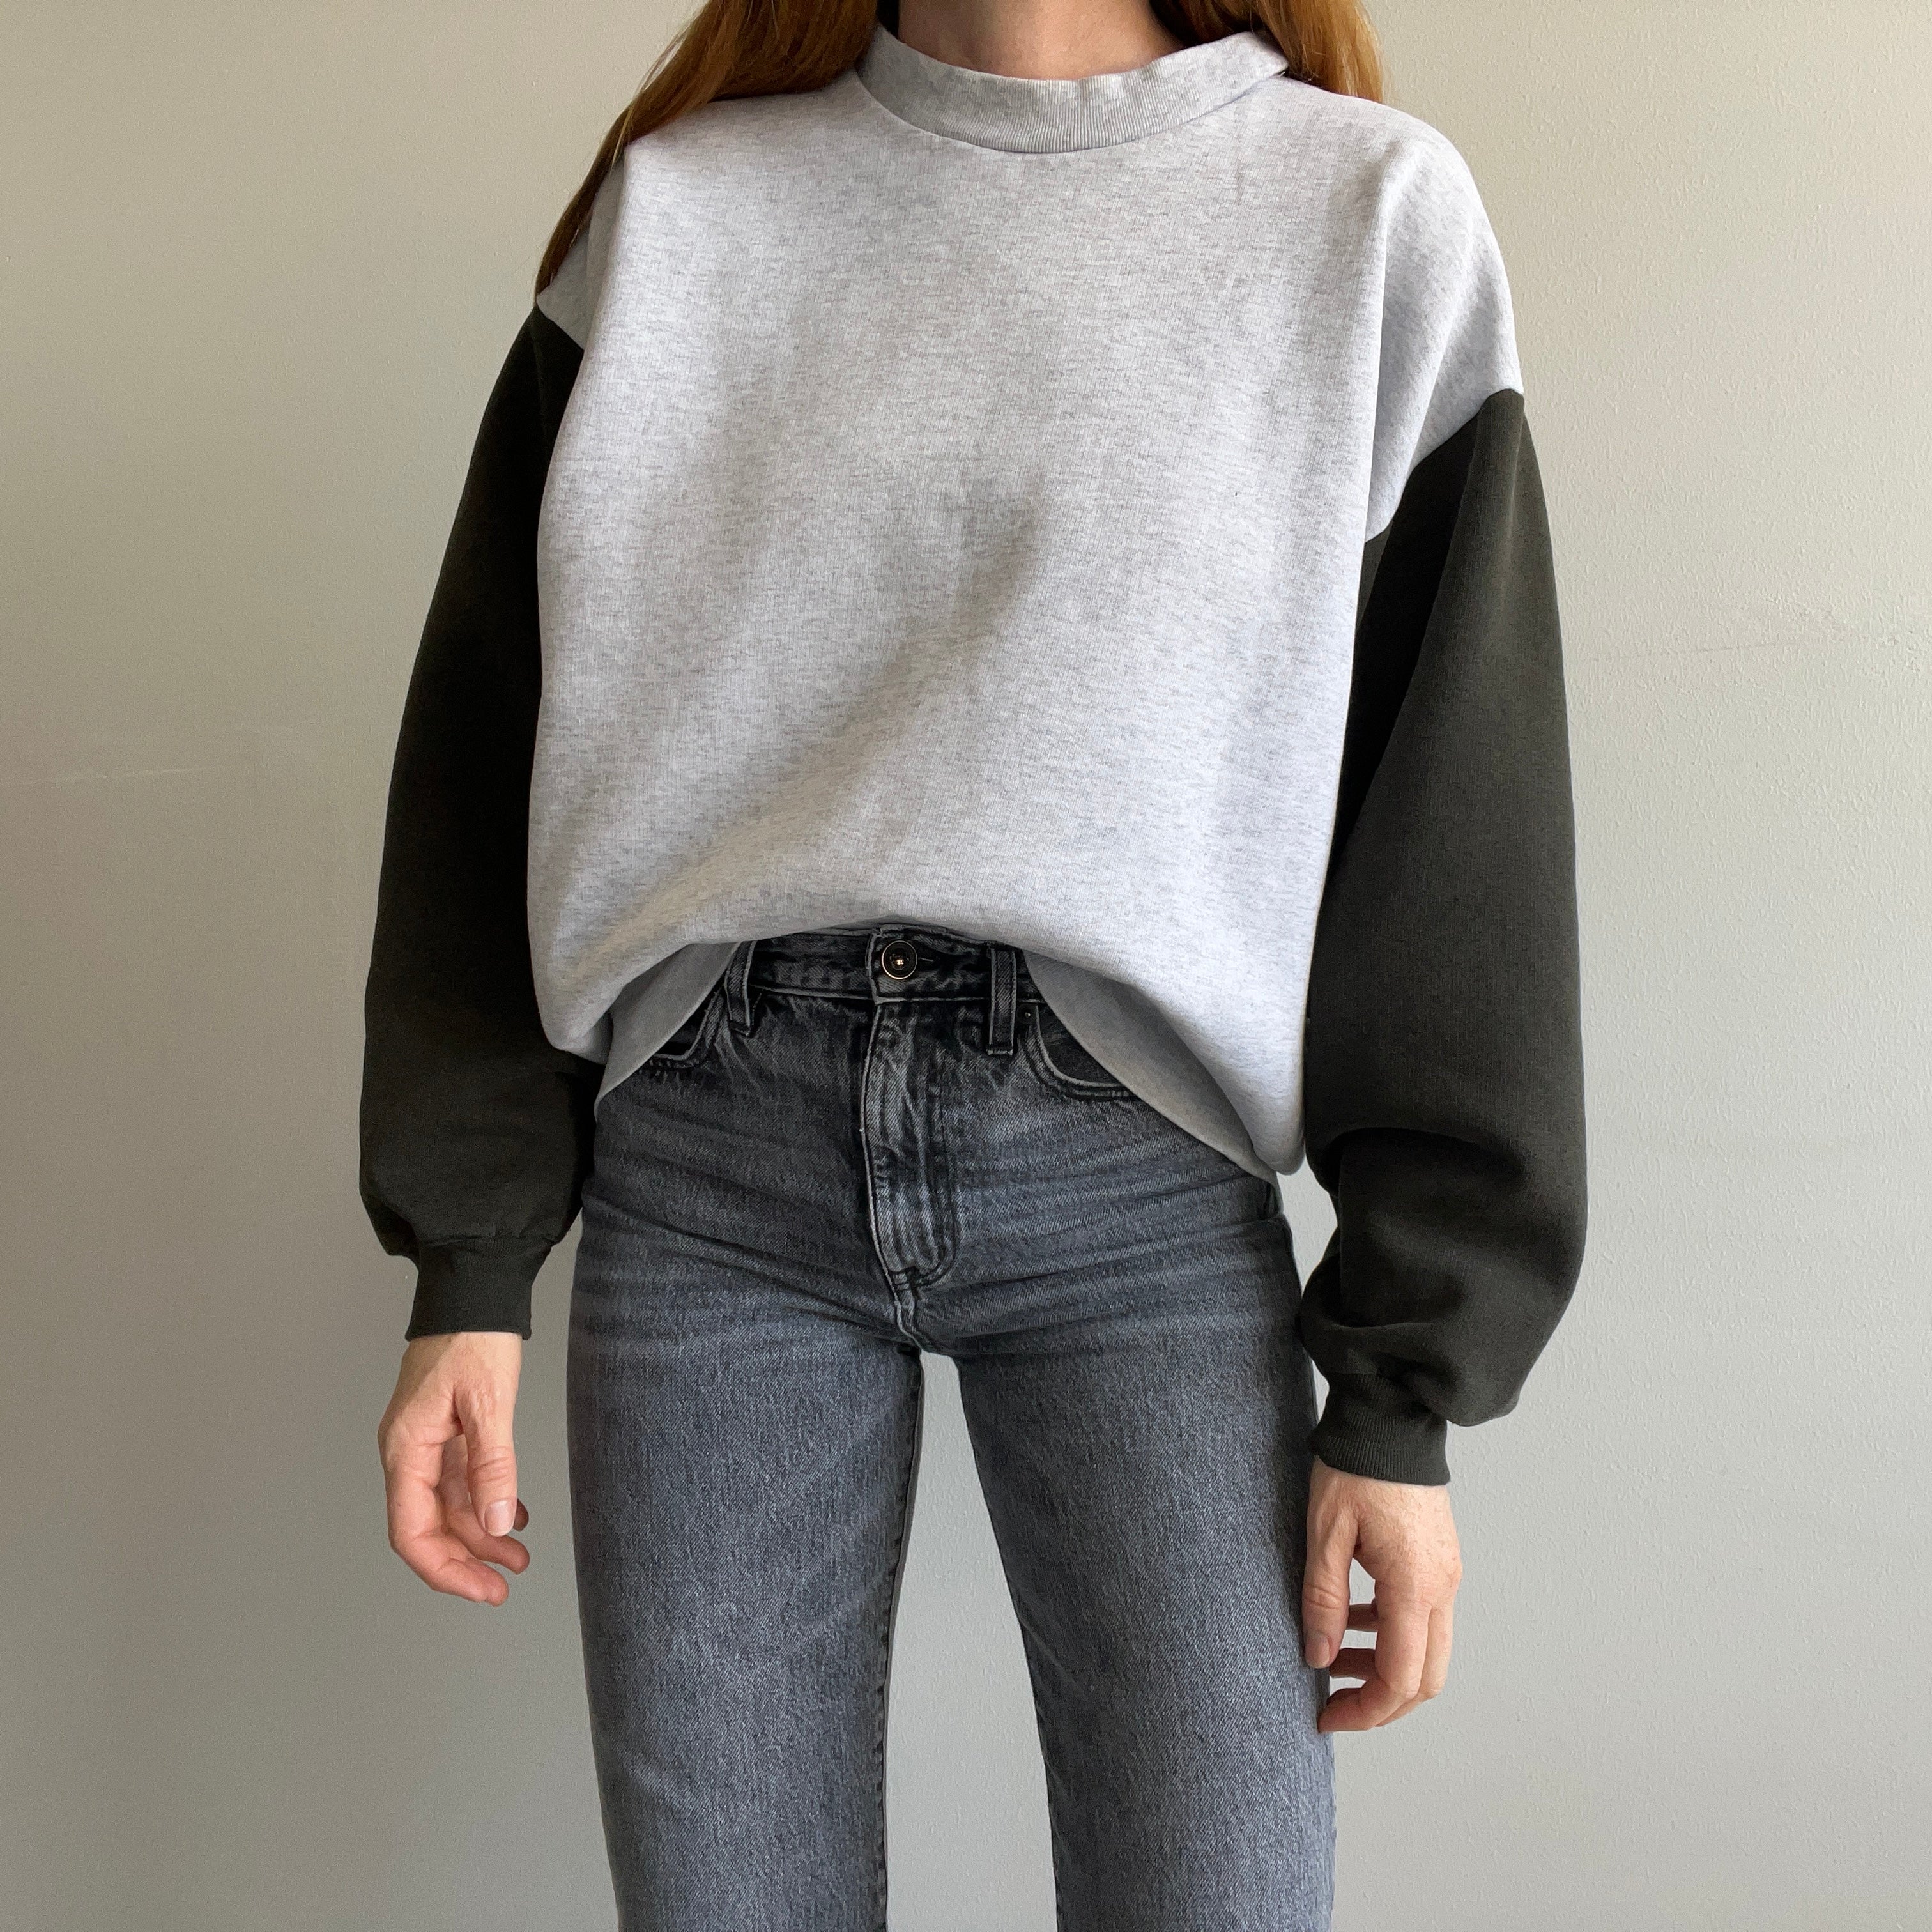 1990s Two Tone Structured Heavyweight Sweatshirt